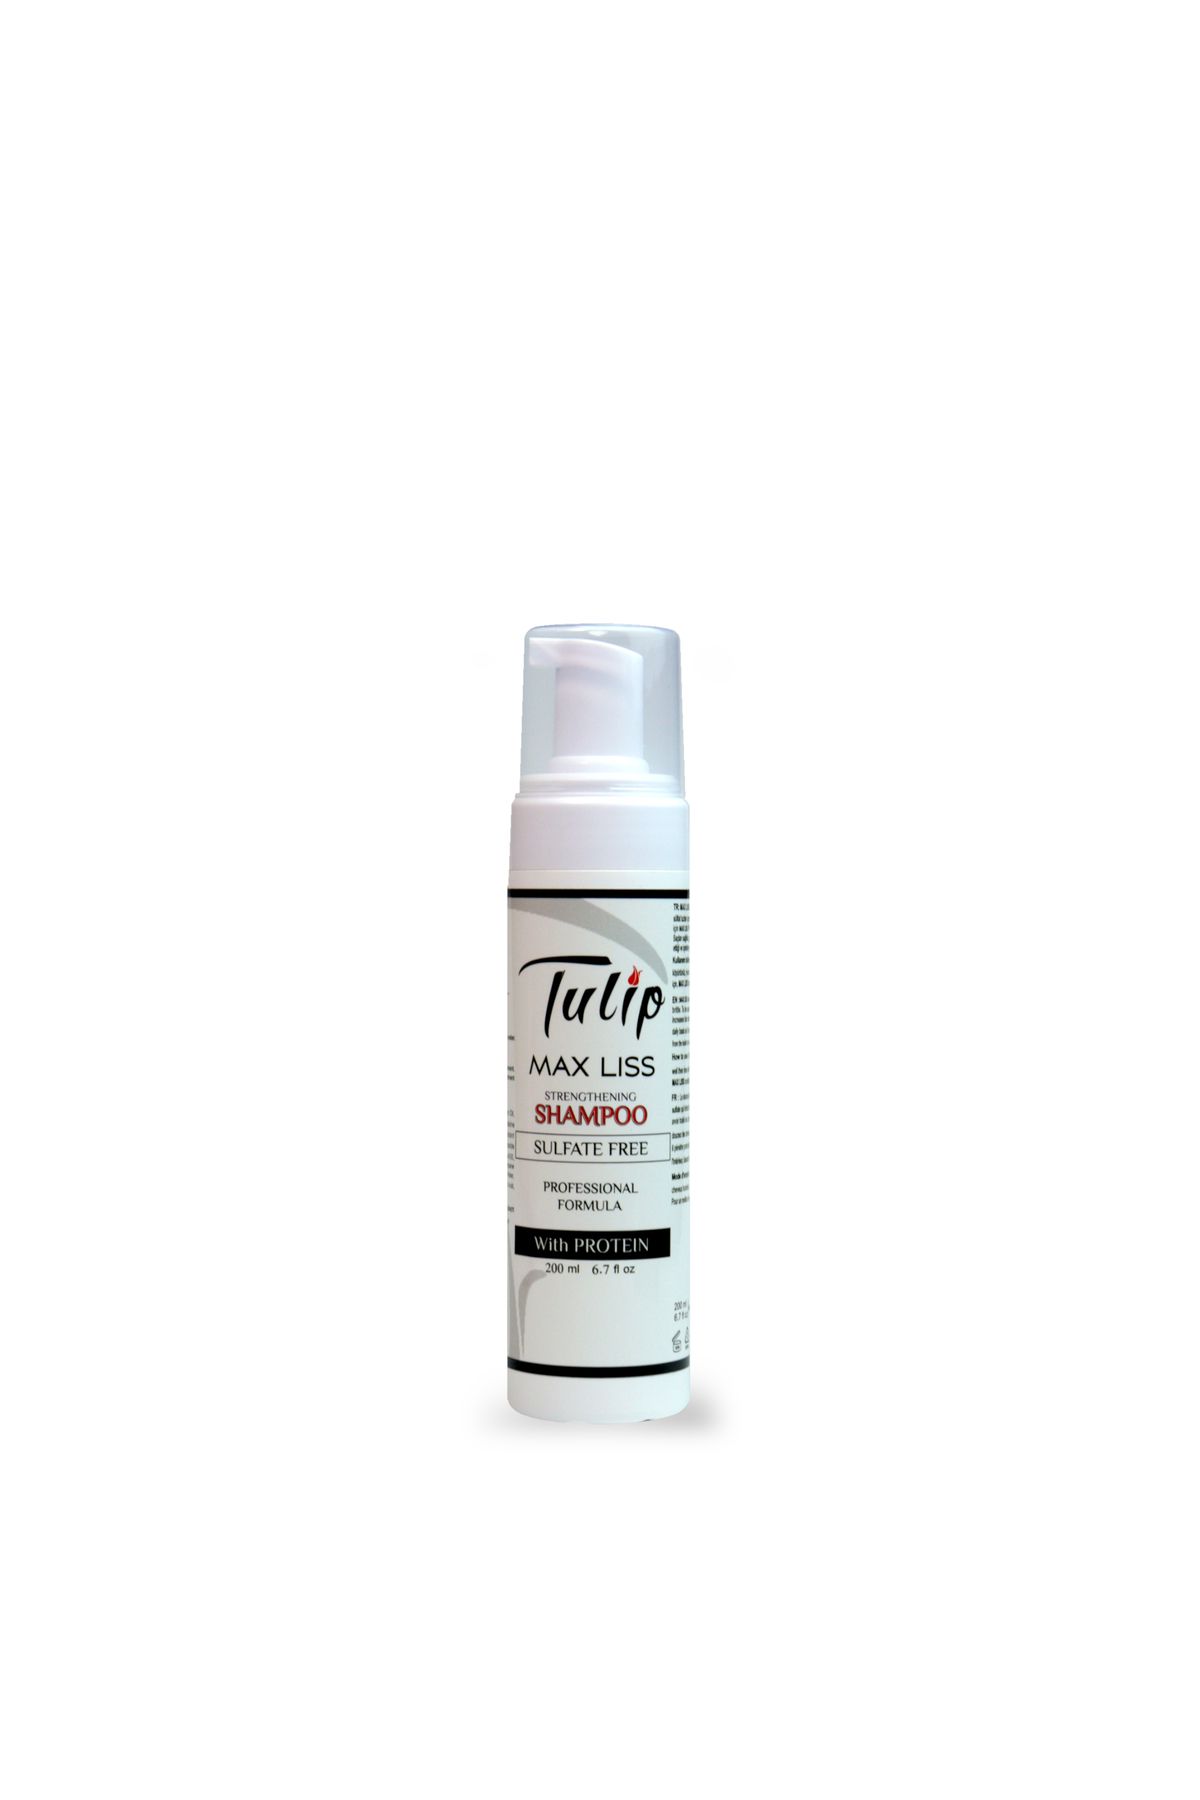 Tulip Max Liss 200 ml Sülfatsız Protein Ile Şampuanı / Sulfat Free After Protein Treatment Shampoo